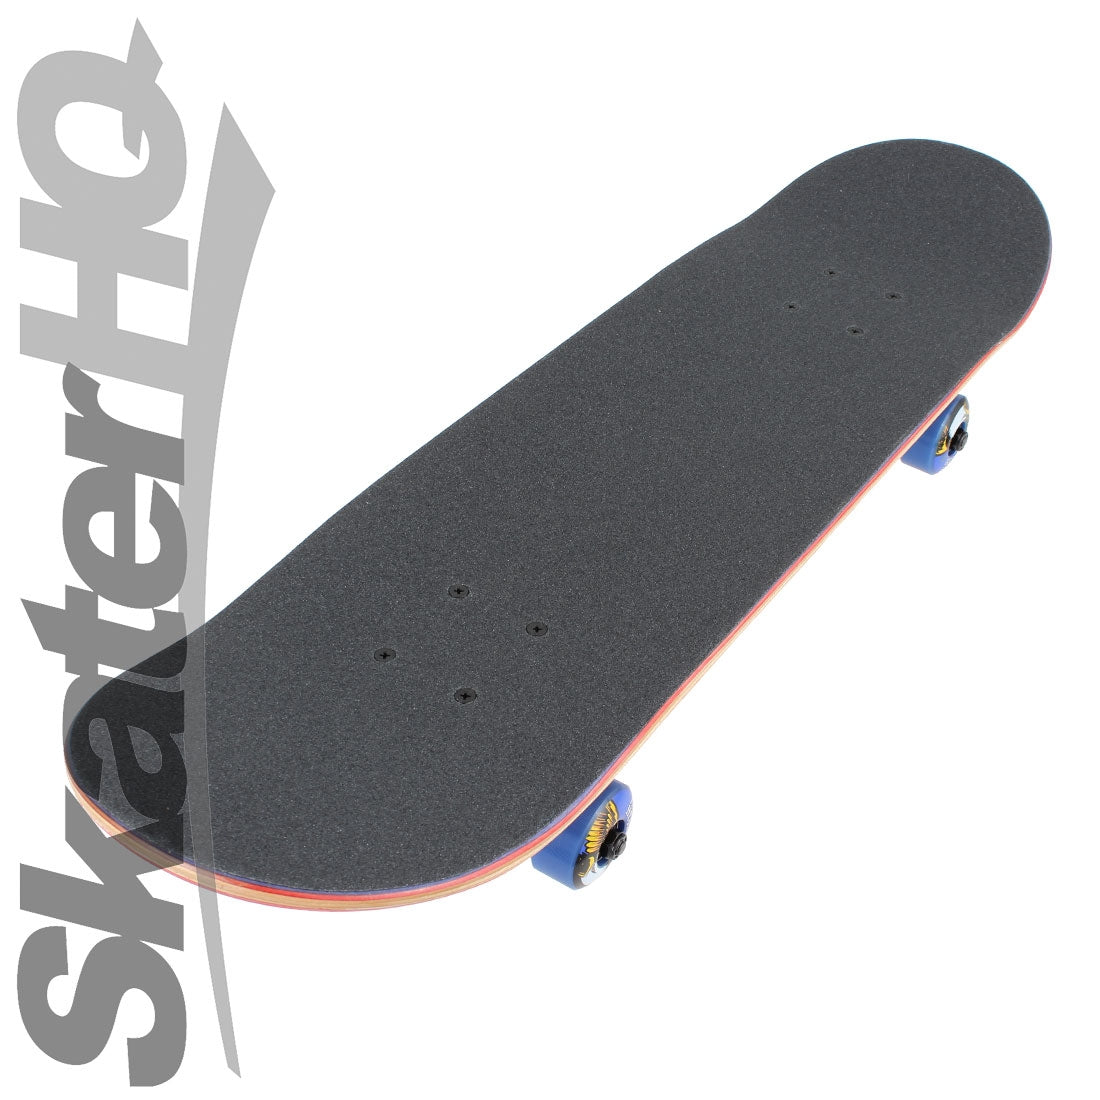 Antihero Classic Eagle 7.38 Mini Complete Skateboard Completes Modern Street